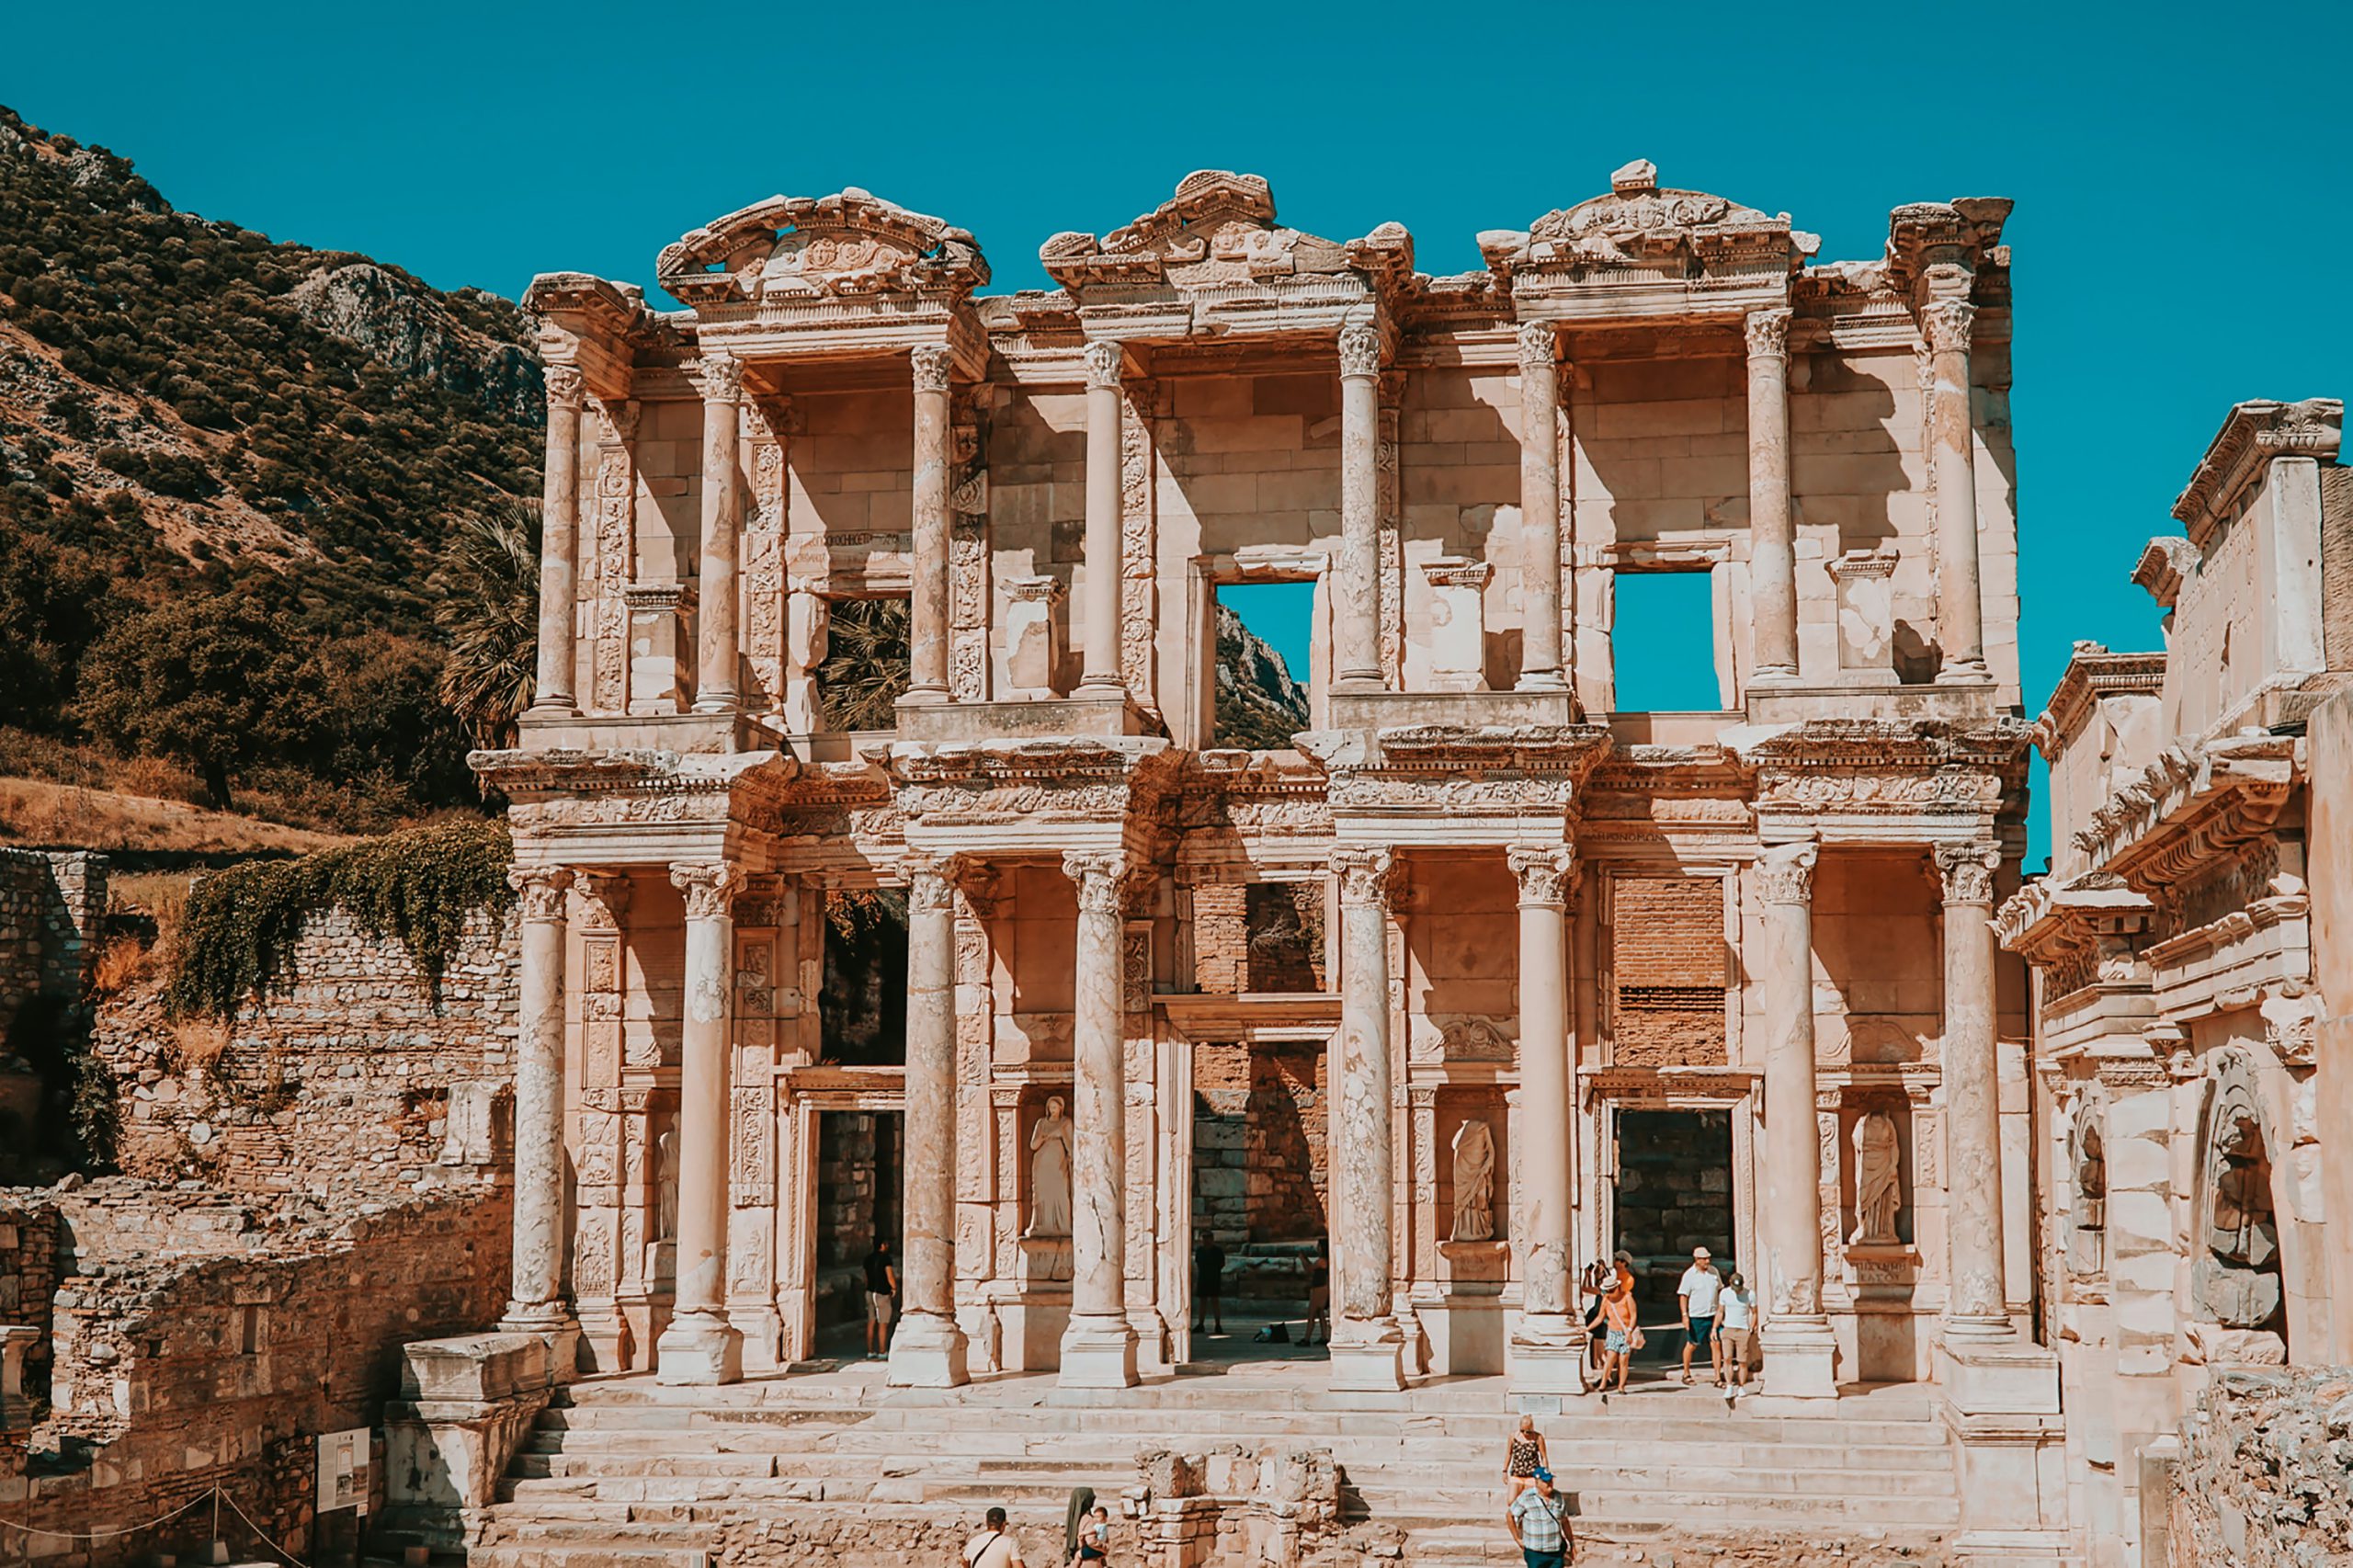 Efes Antik Kenti’ne yoğun ilgi